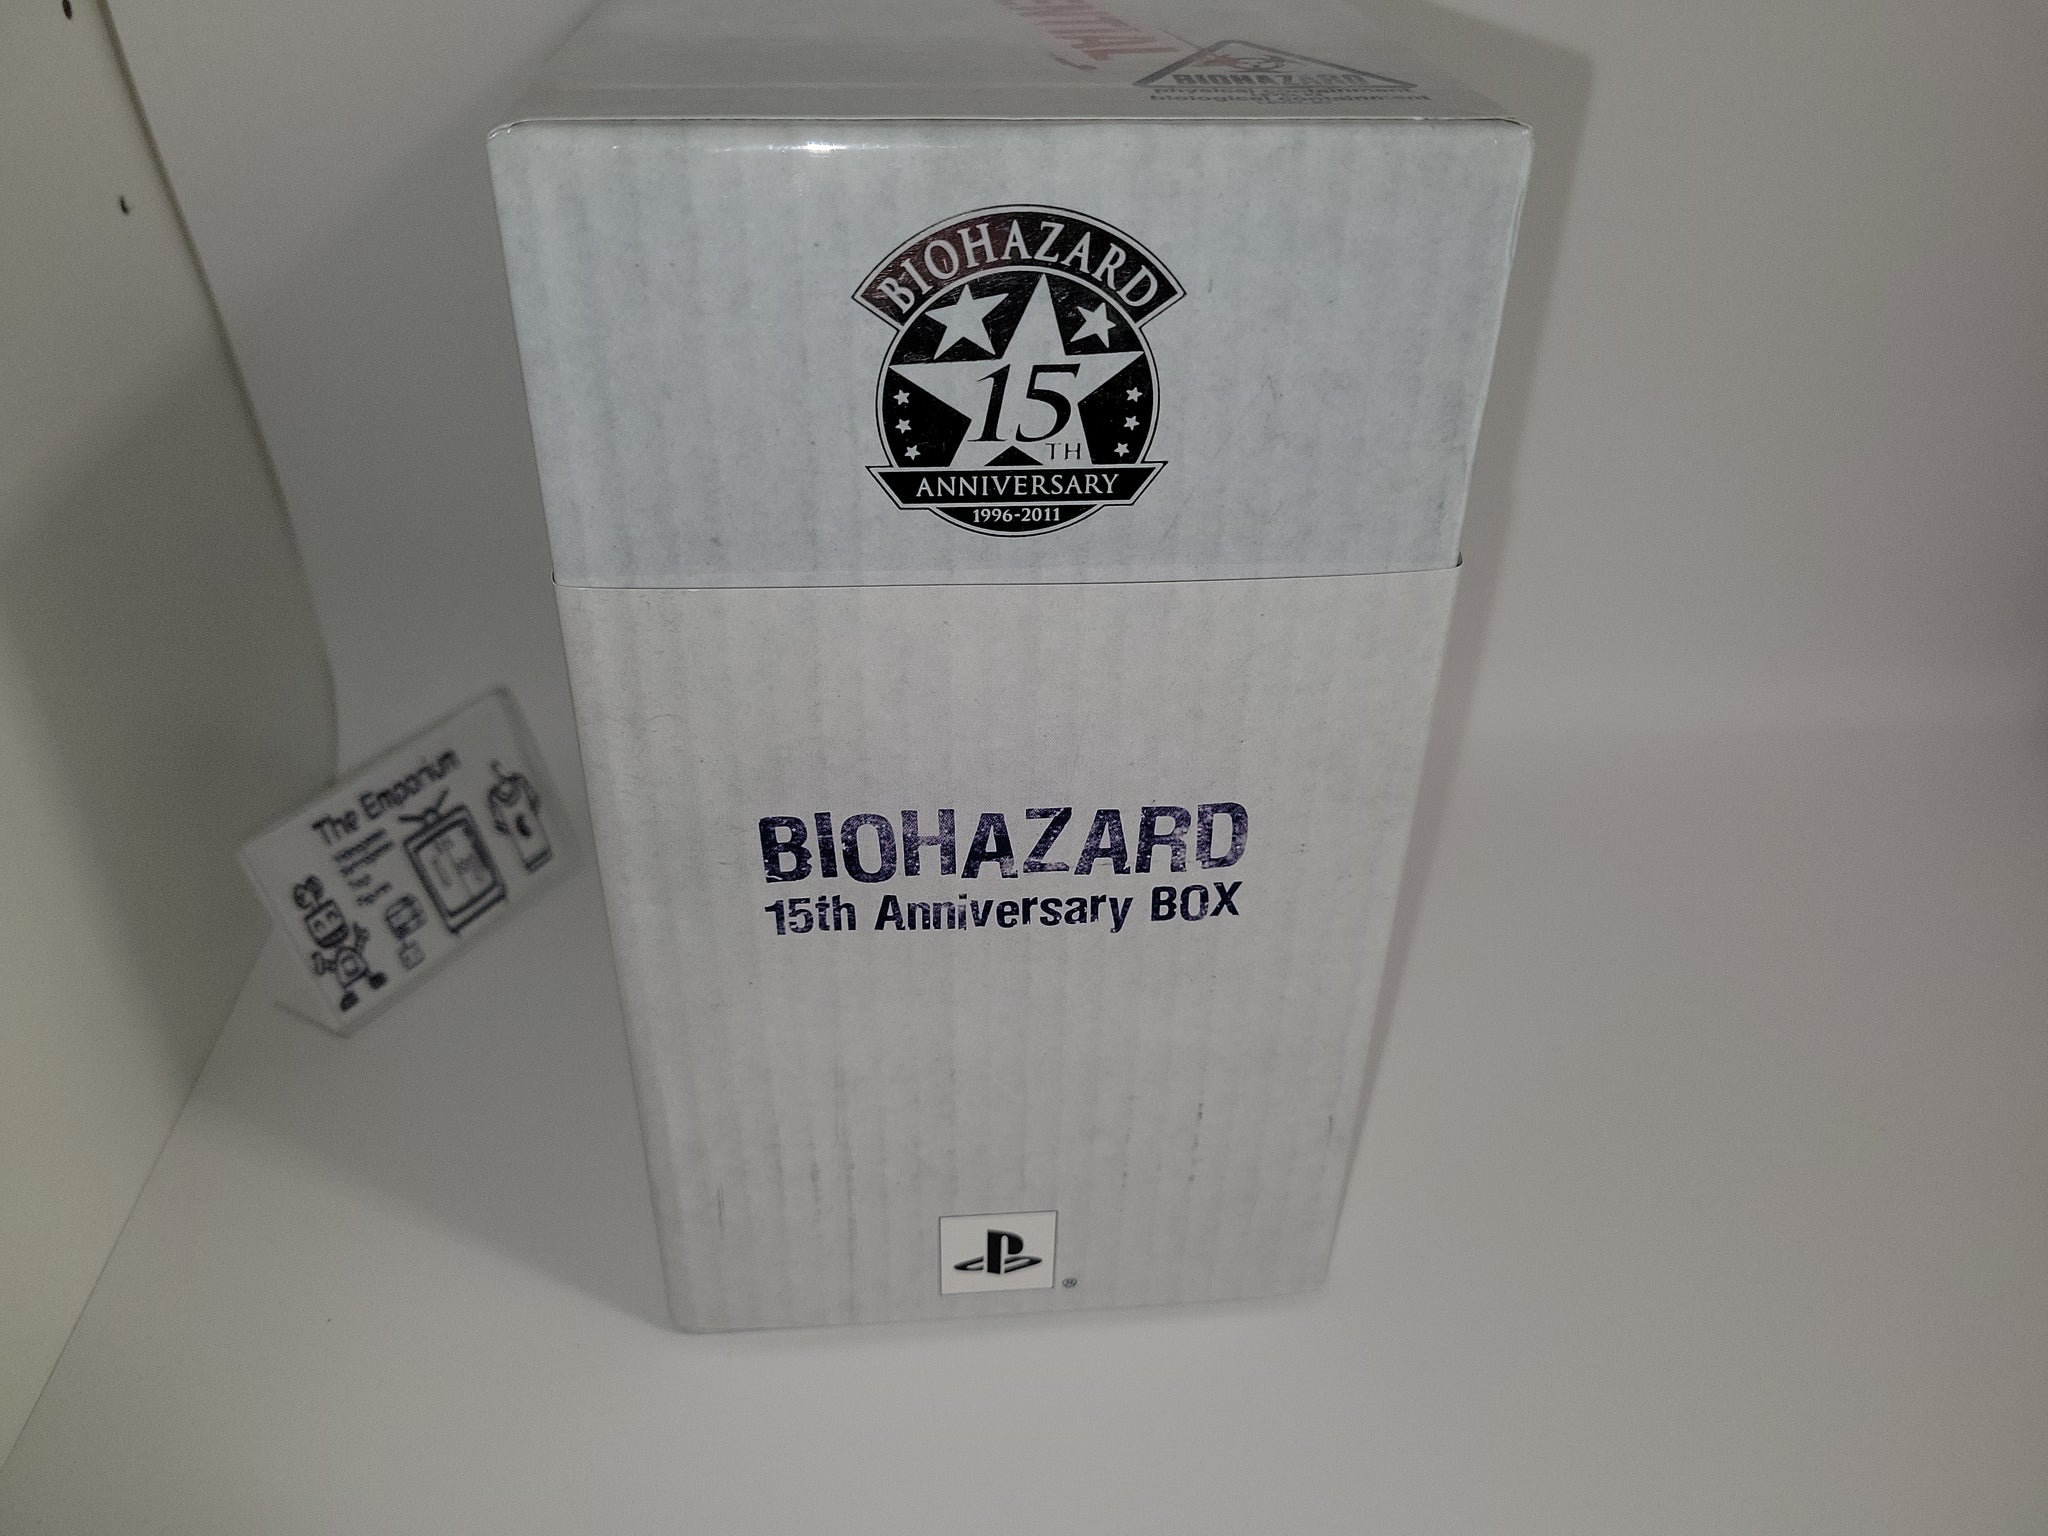 Biohazard 15th Anniversary Box - Sony PS3 Playstation 3 – The